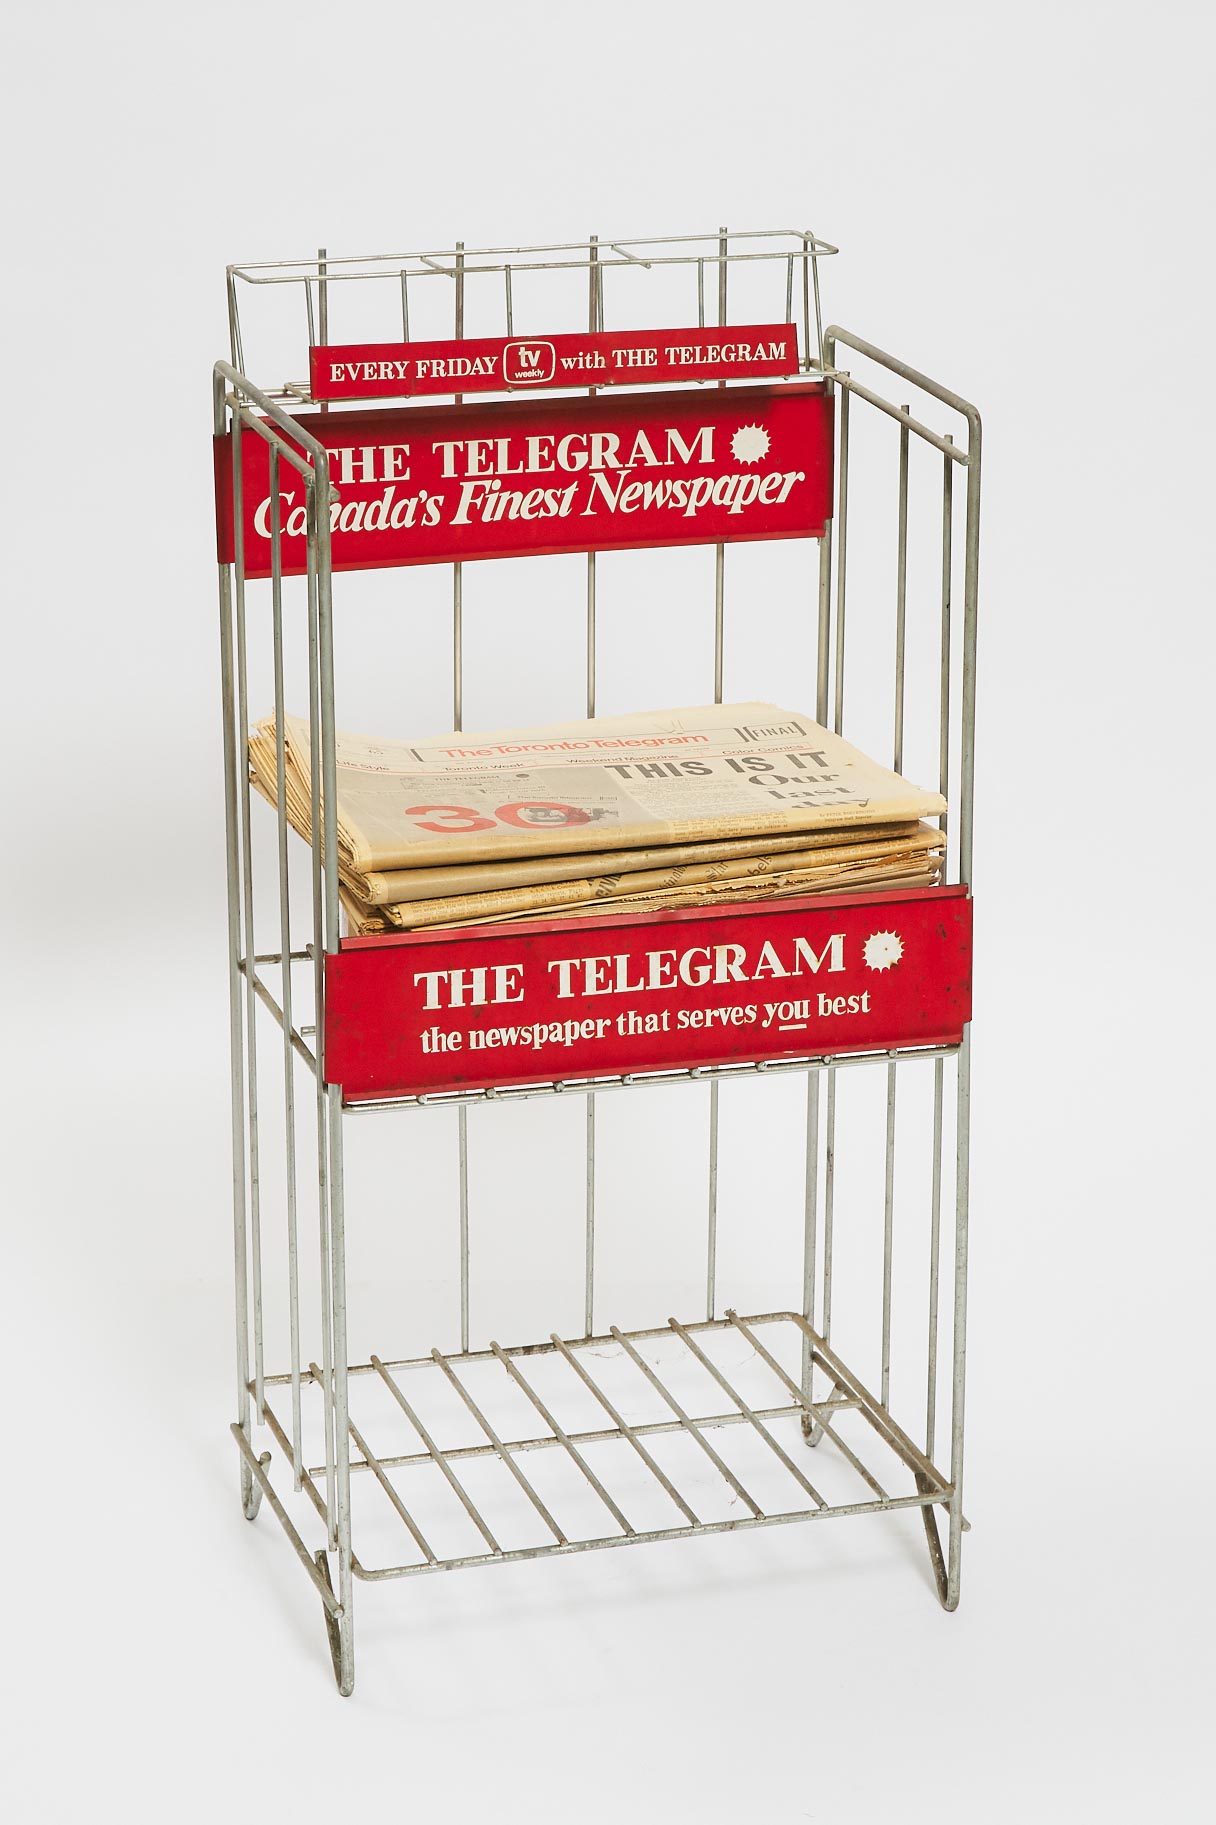 The Toronto Telegram Newspaper Stand, c.1965